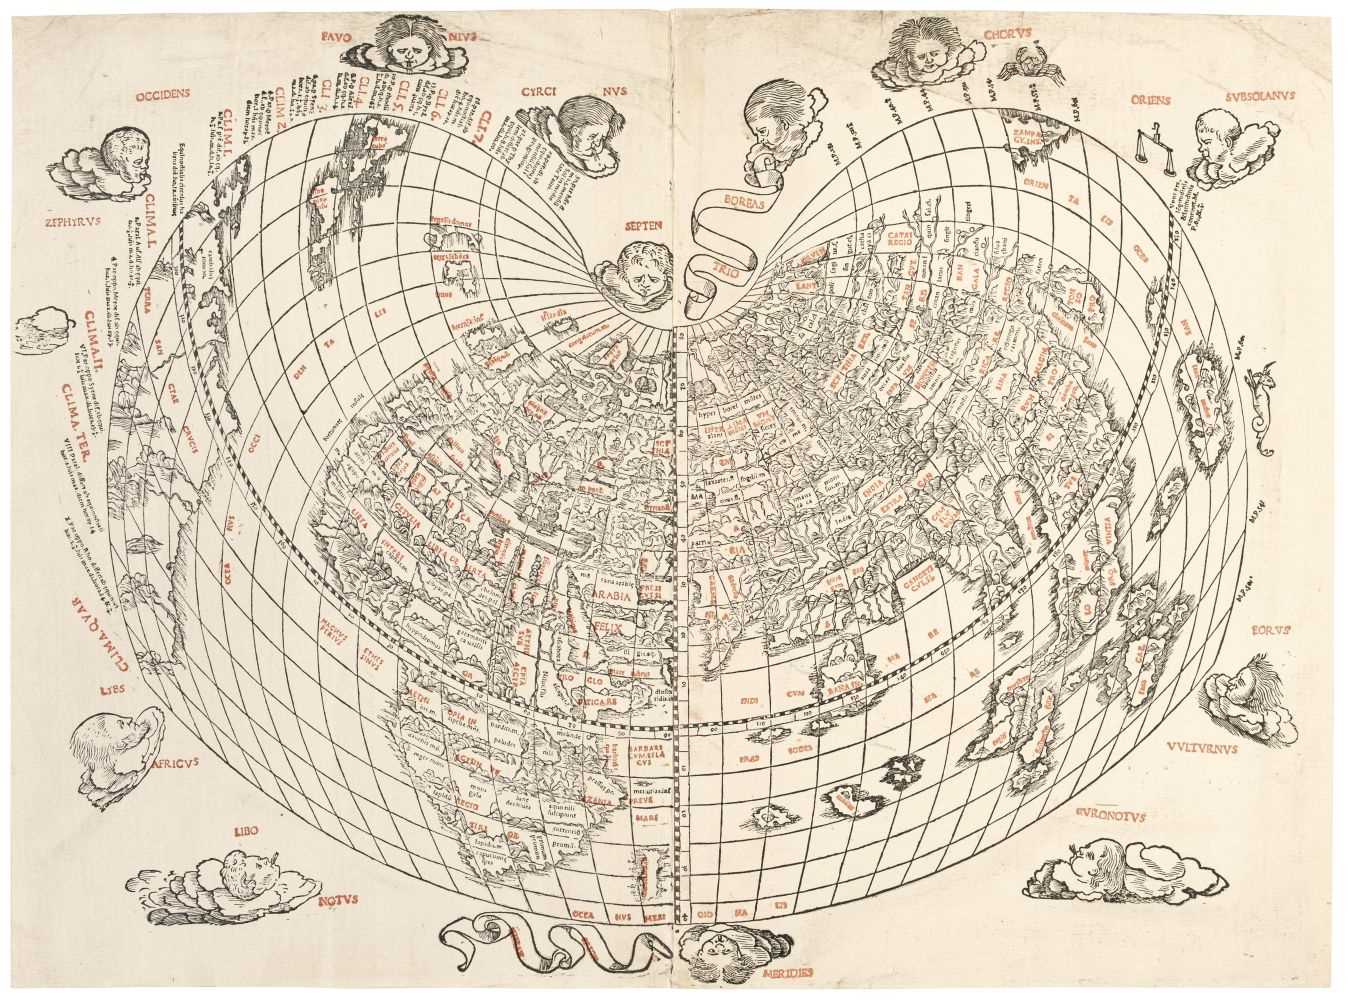 454 - World. Sylvanus (Bernard), Untitled Map of the World, Venice, 1511